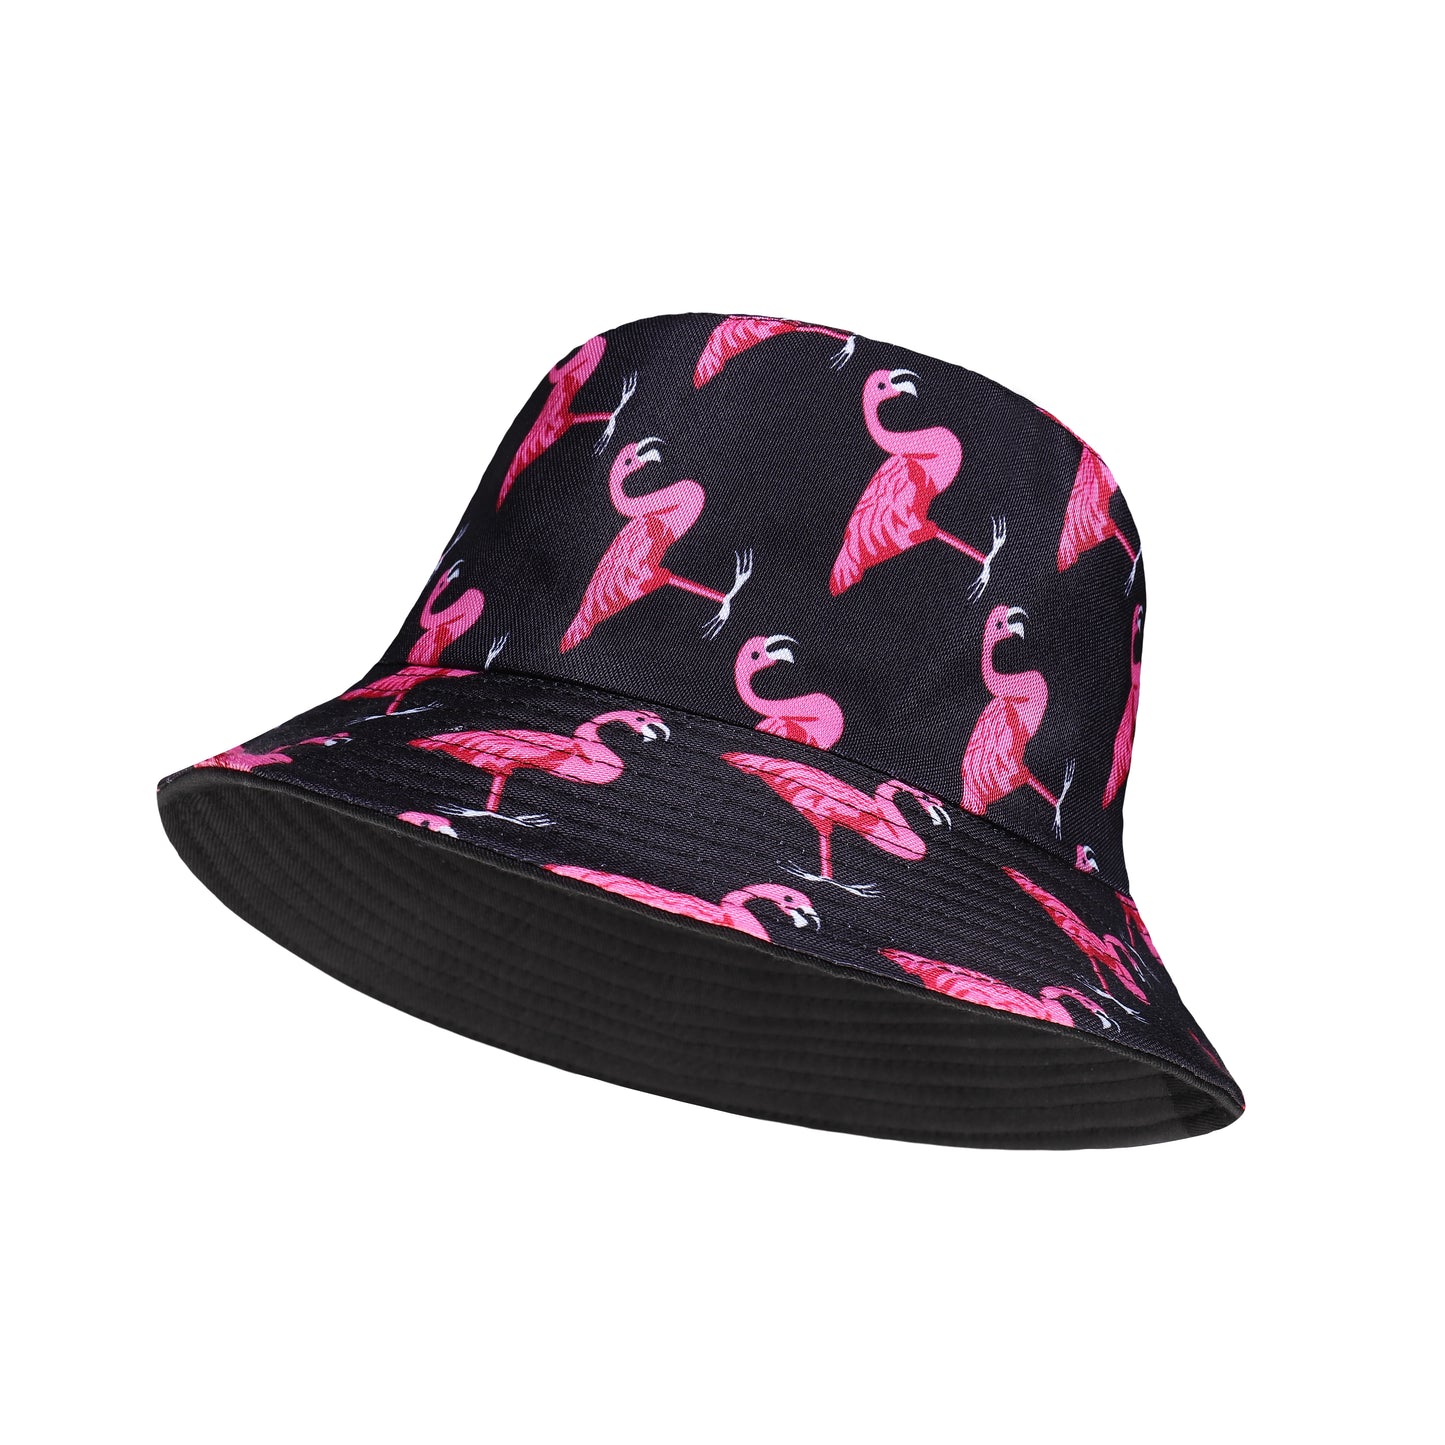 Bucket hat 100% cotton with reversible design, flamingo black festival hat